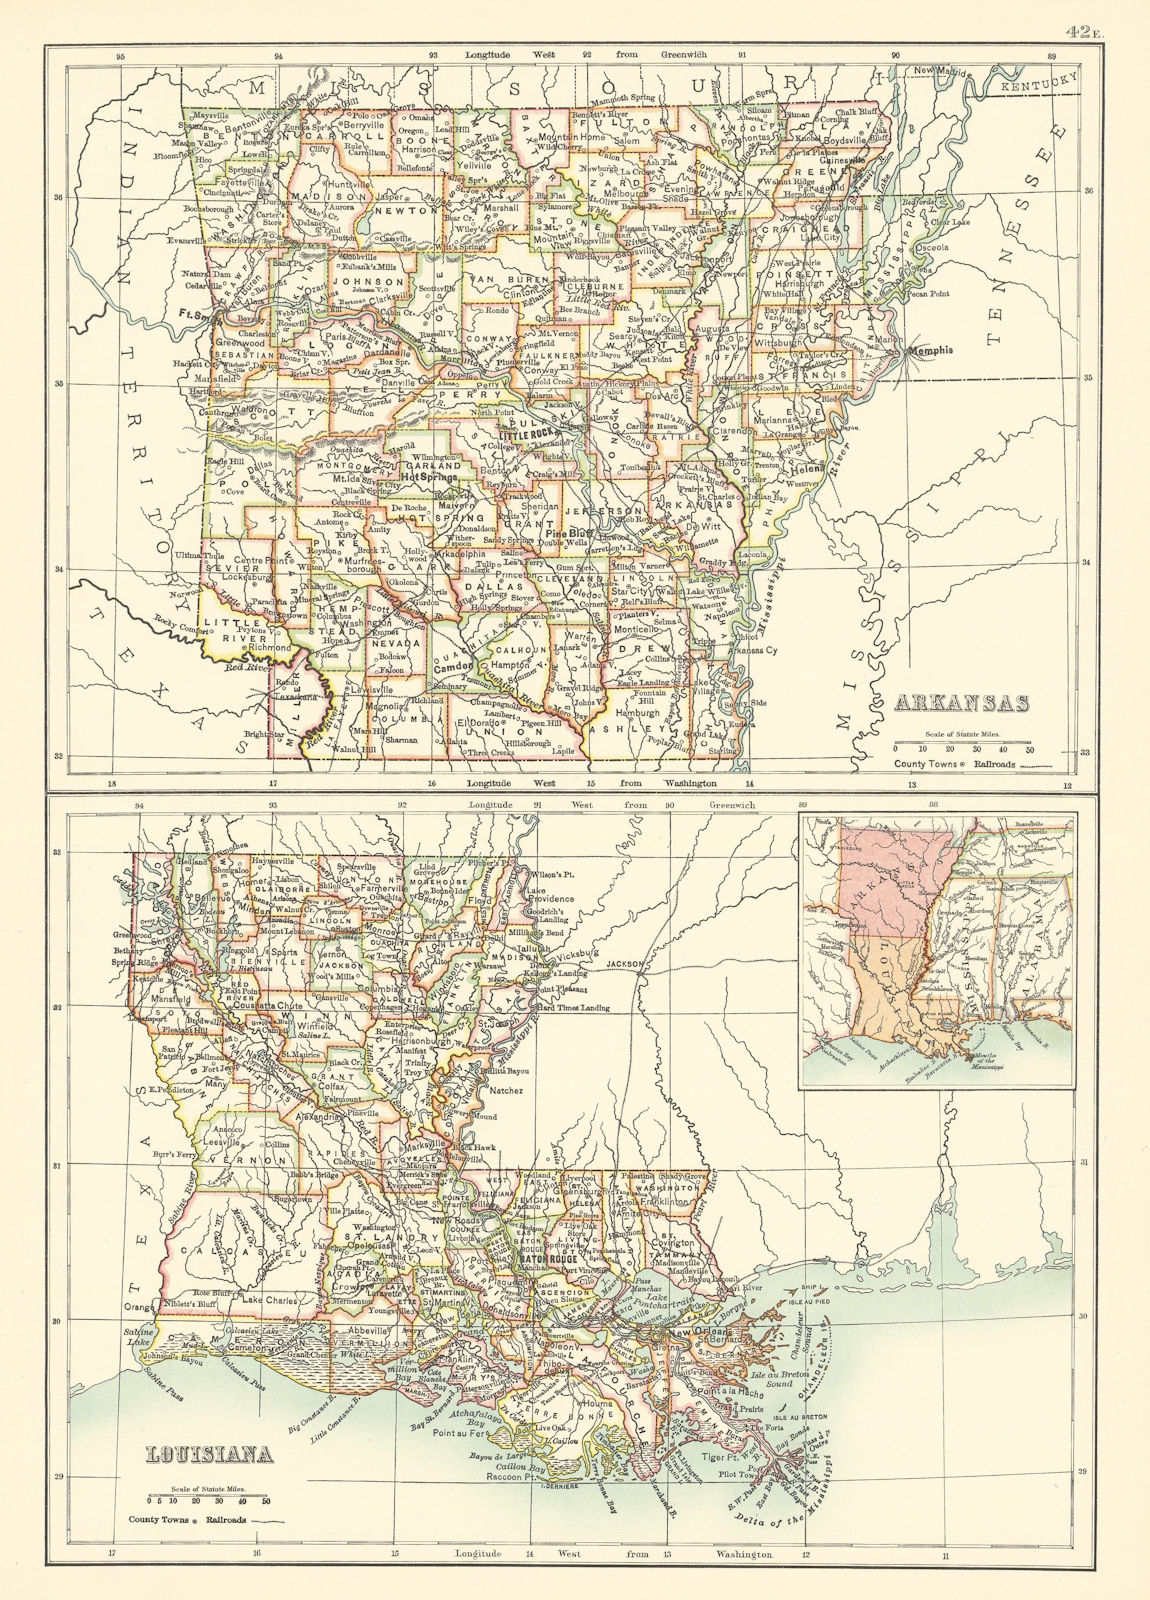 Louisiana and Arkansas state maps showing parishes/counties. BARTHOLOMEW 1898